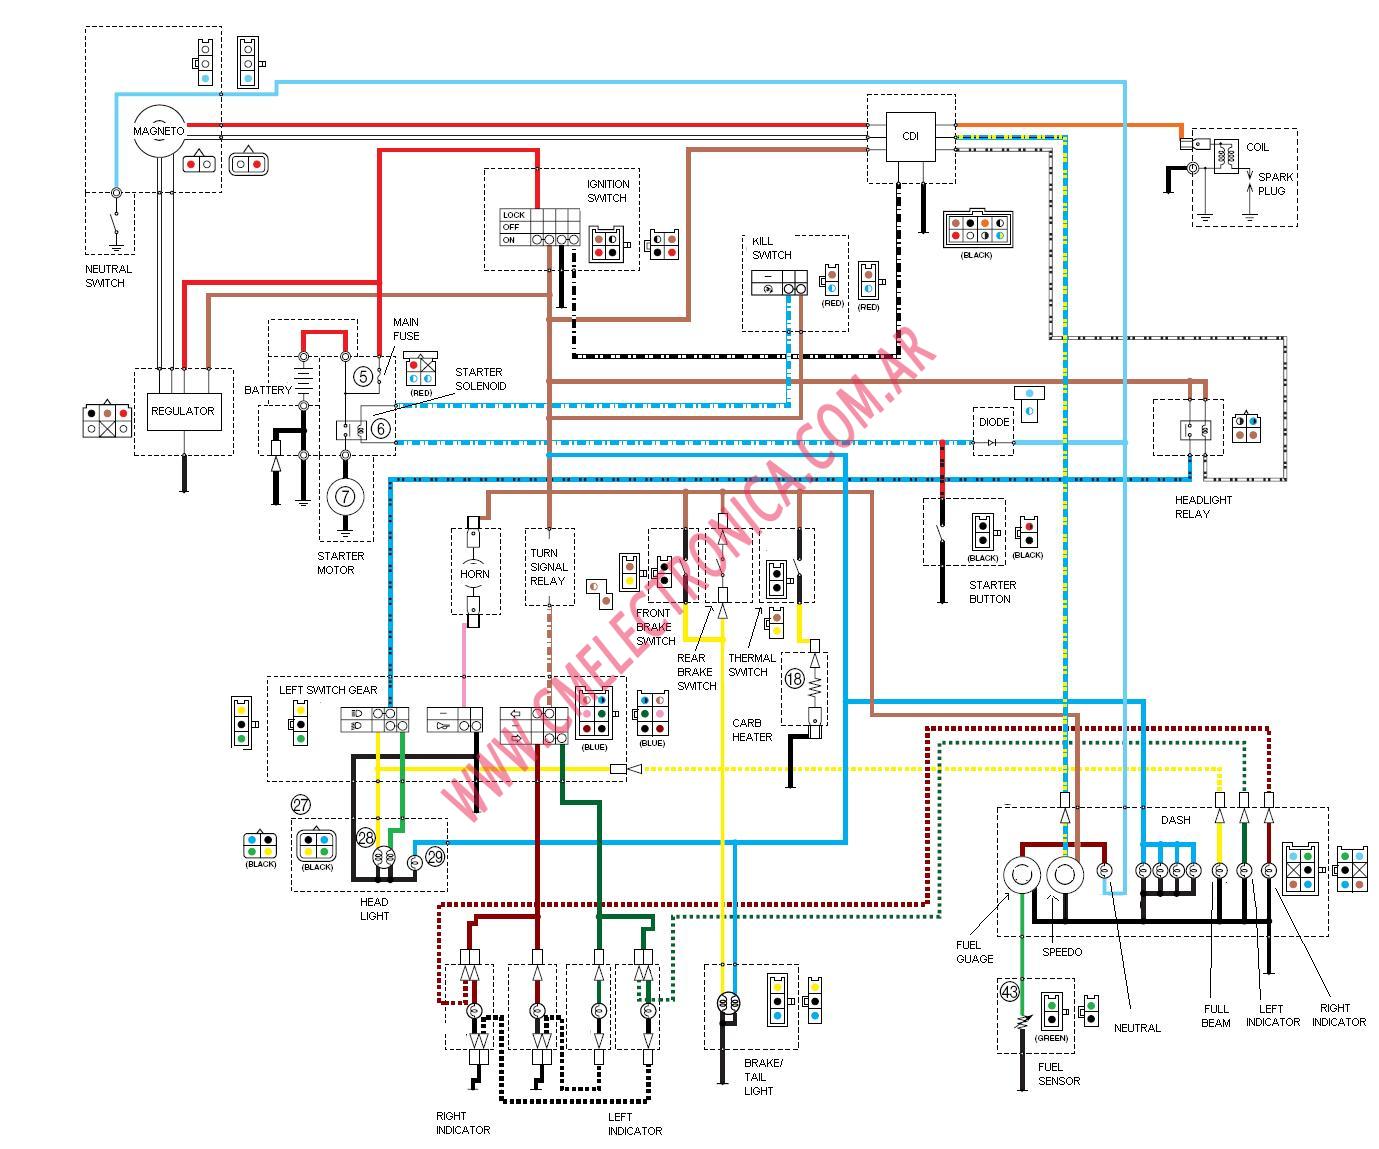 wiring diagram can wire roborio